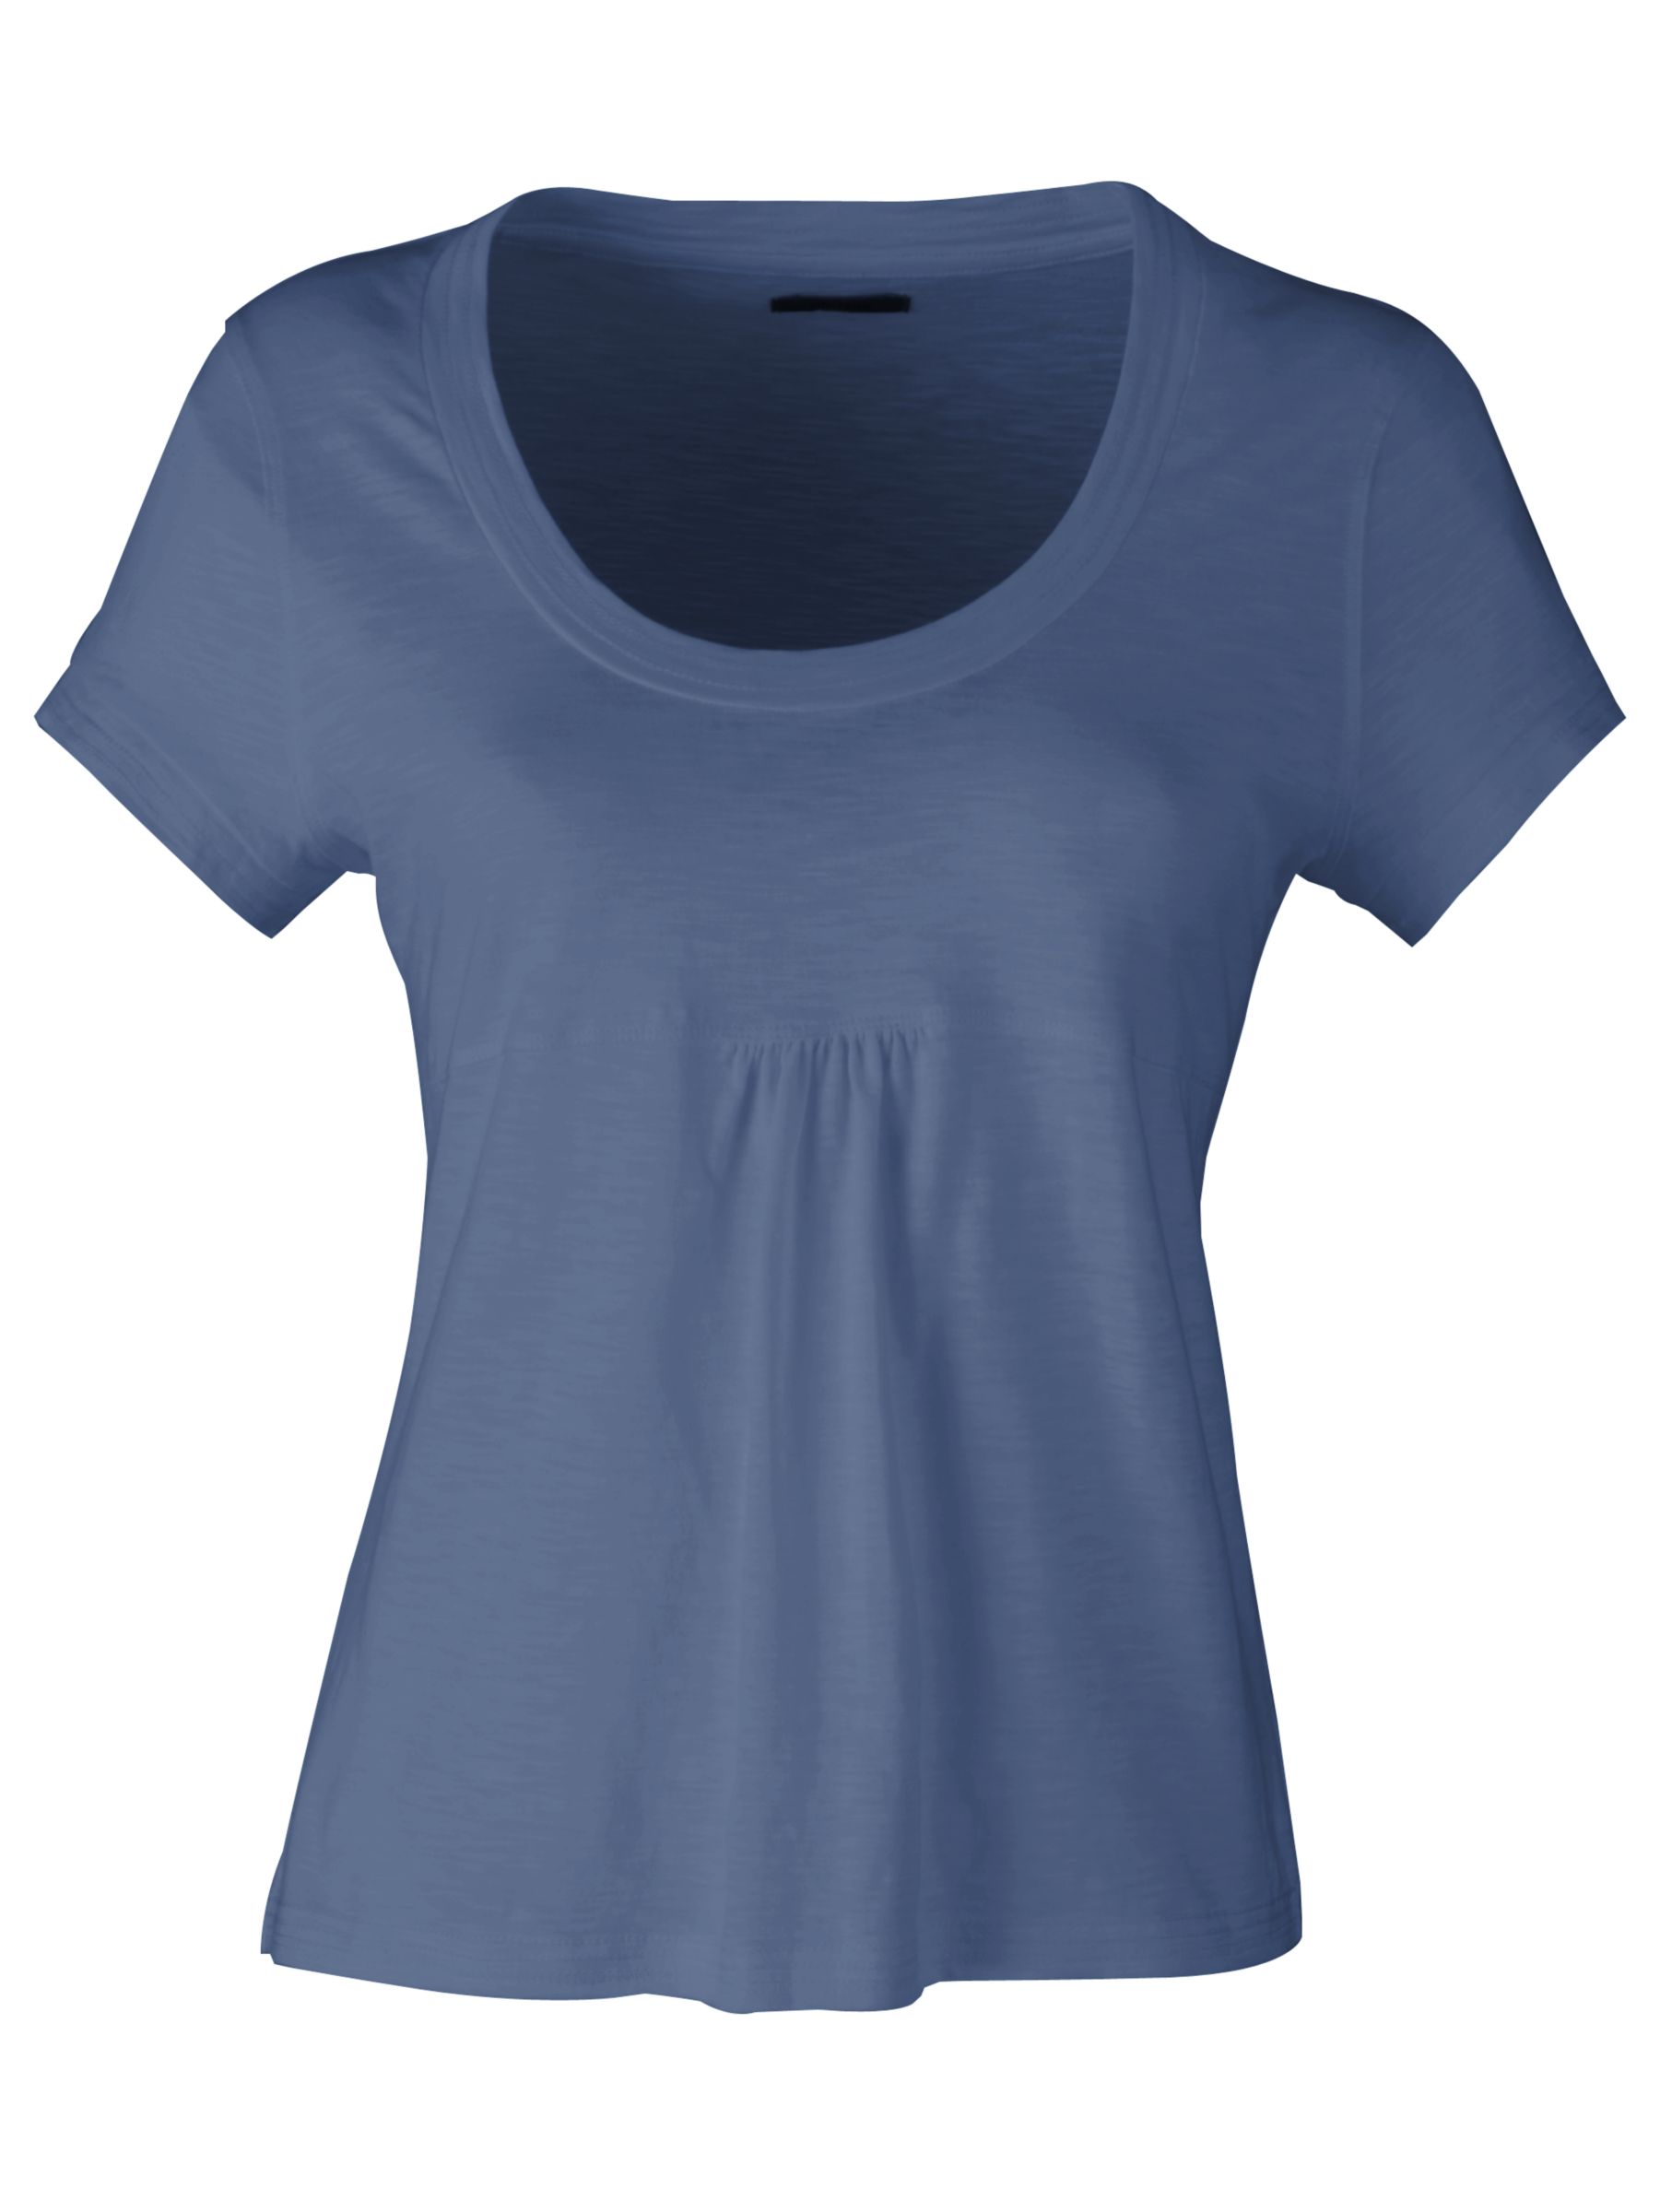 John Lewis Slub Jersey T-Shirt, Denim Blue, Size